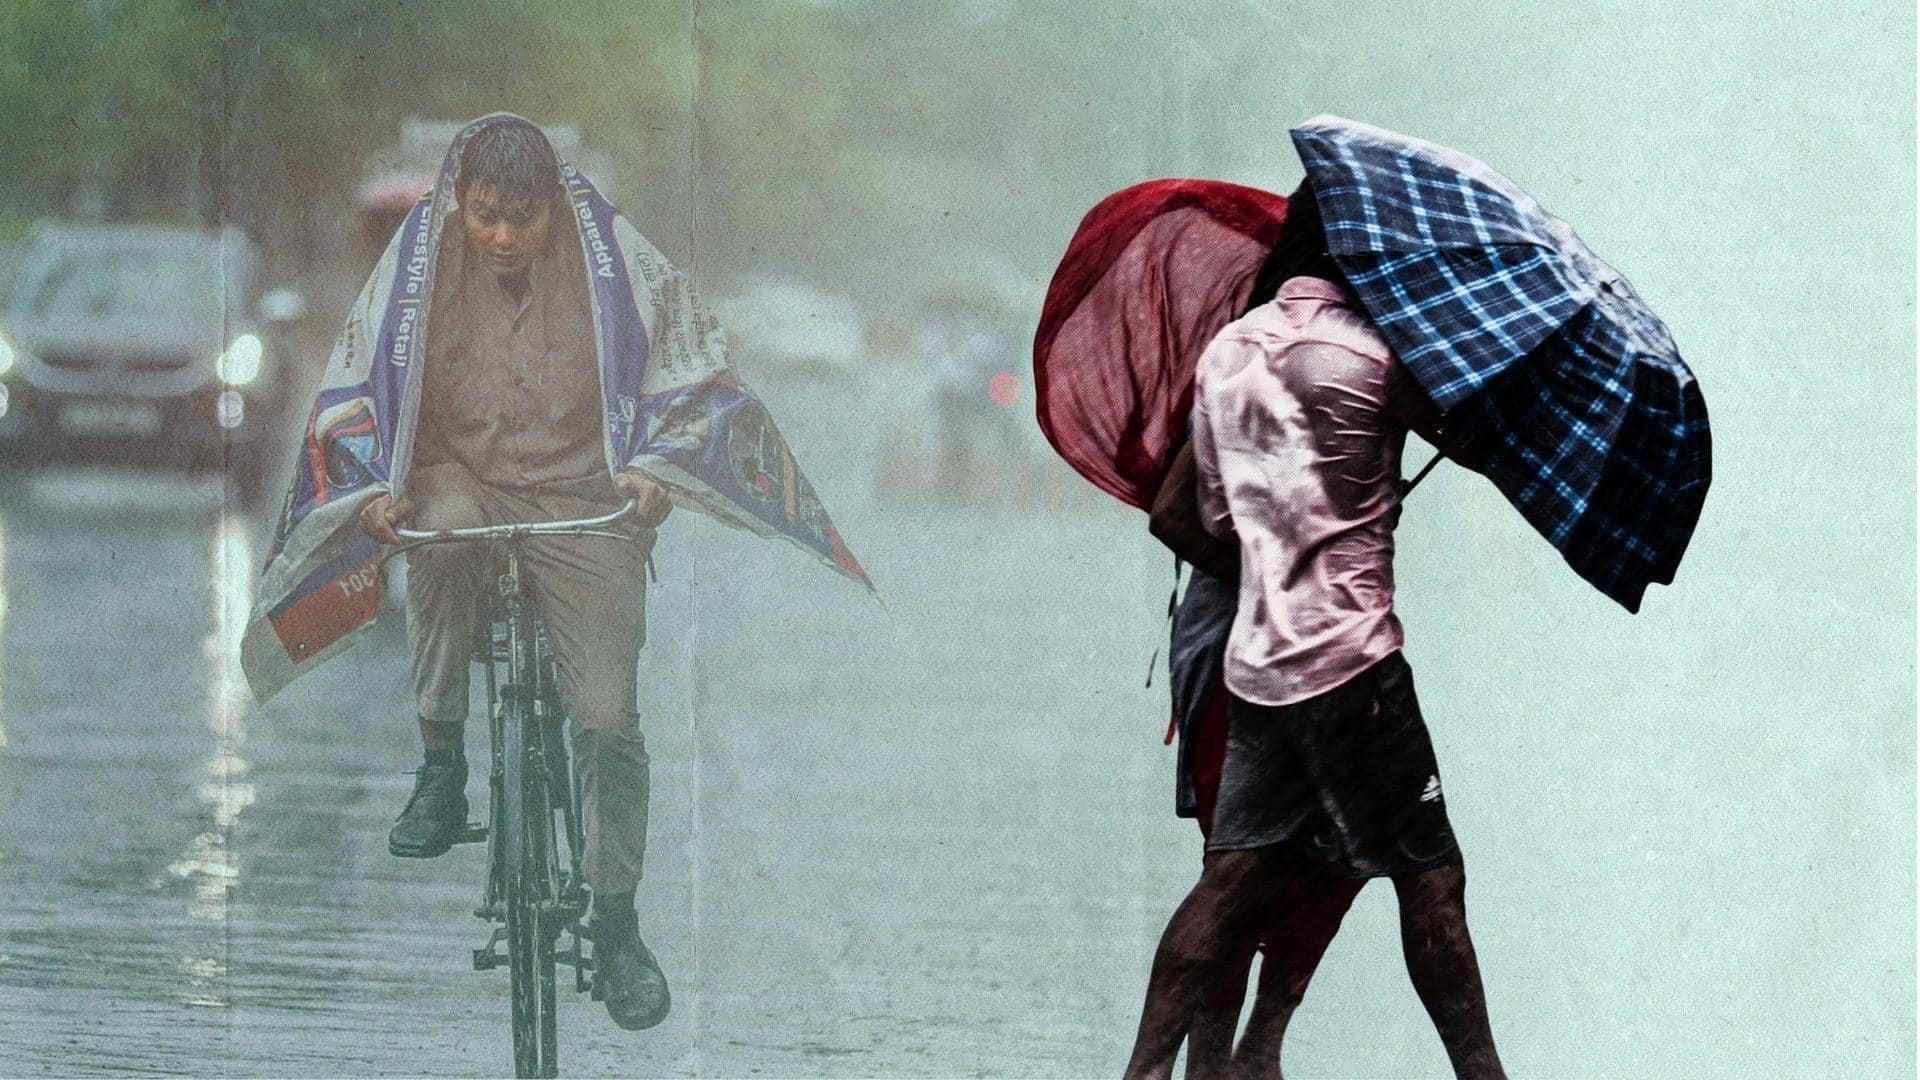 Schools shut, helpline numbers launched: Heavy rain cripples Tamil Nadu